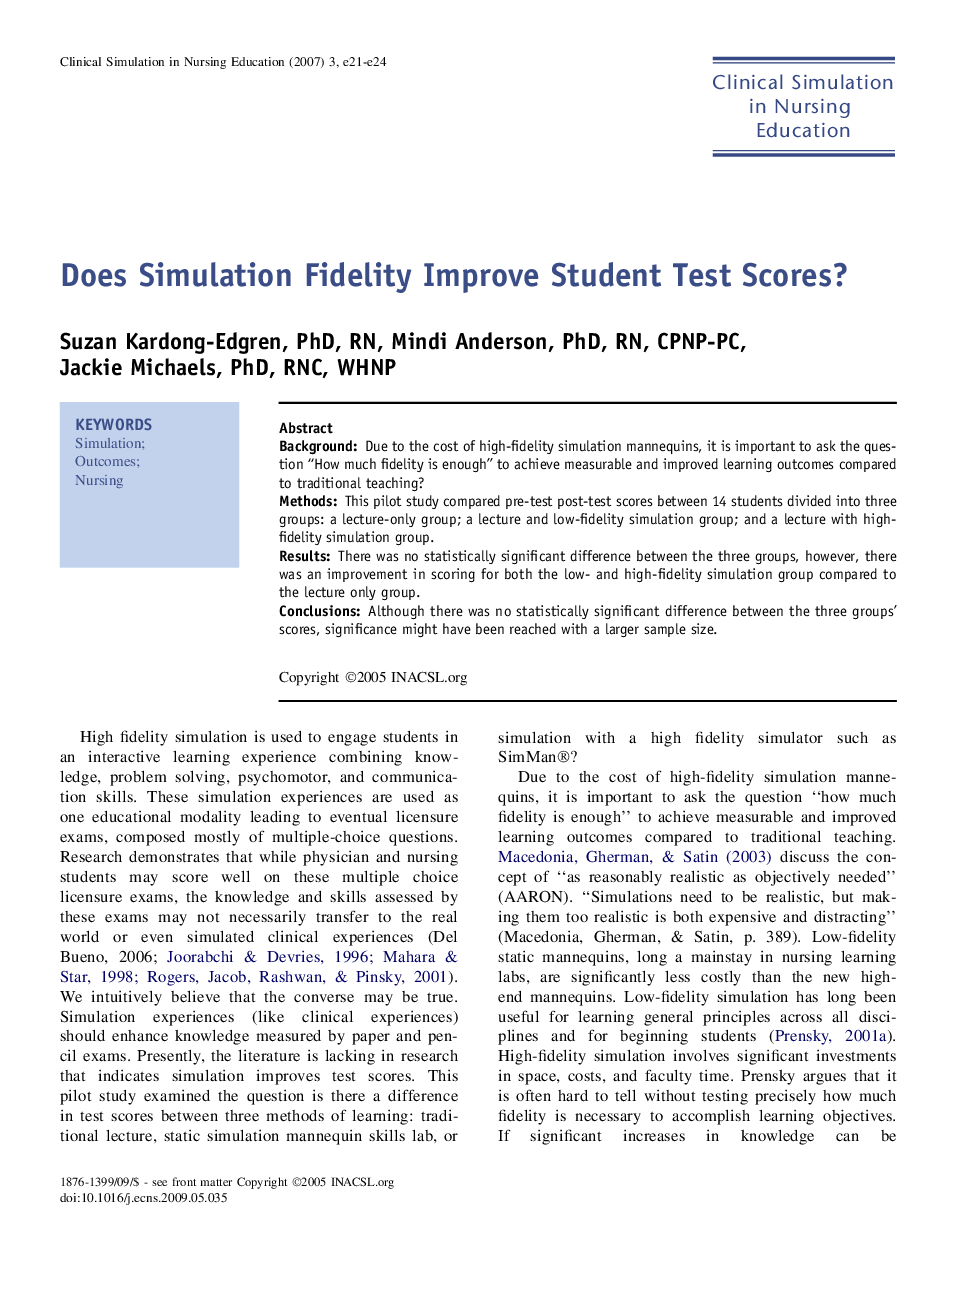 Does Simulation Fidelity Improve Student Test Scores?